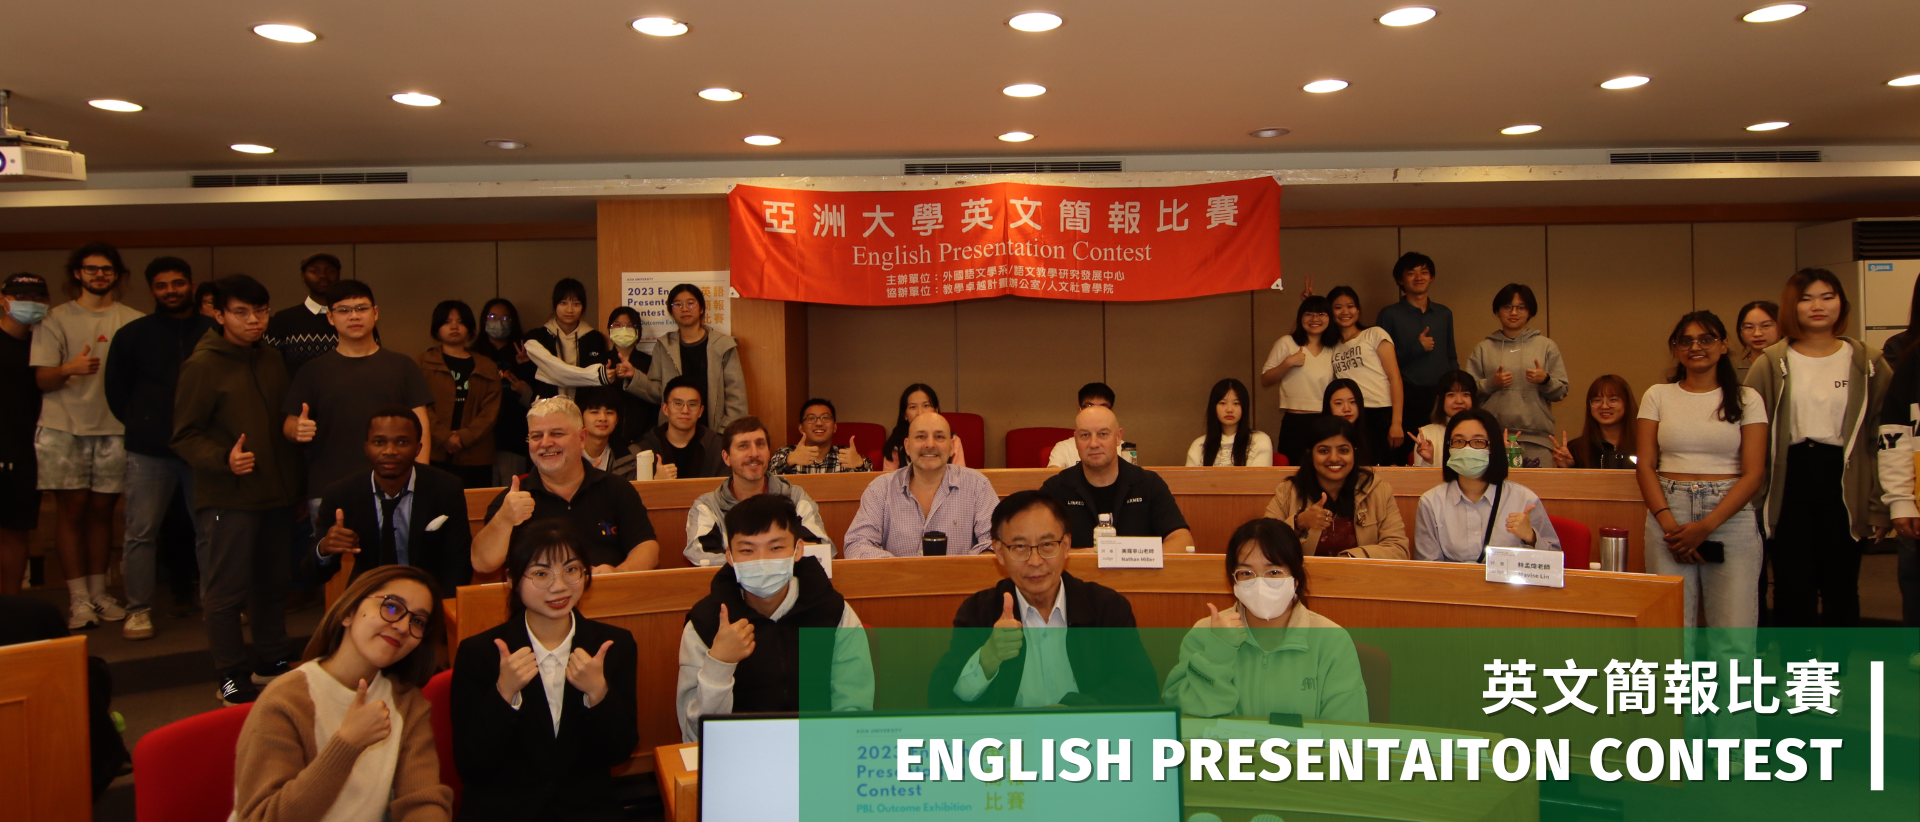  English Presentation Contest